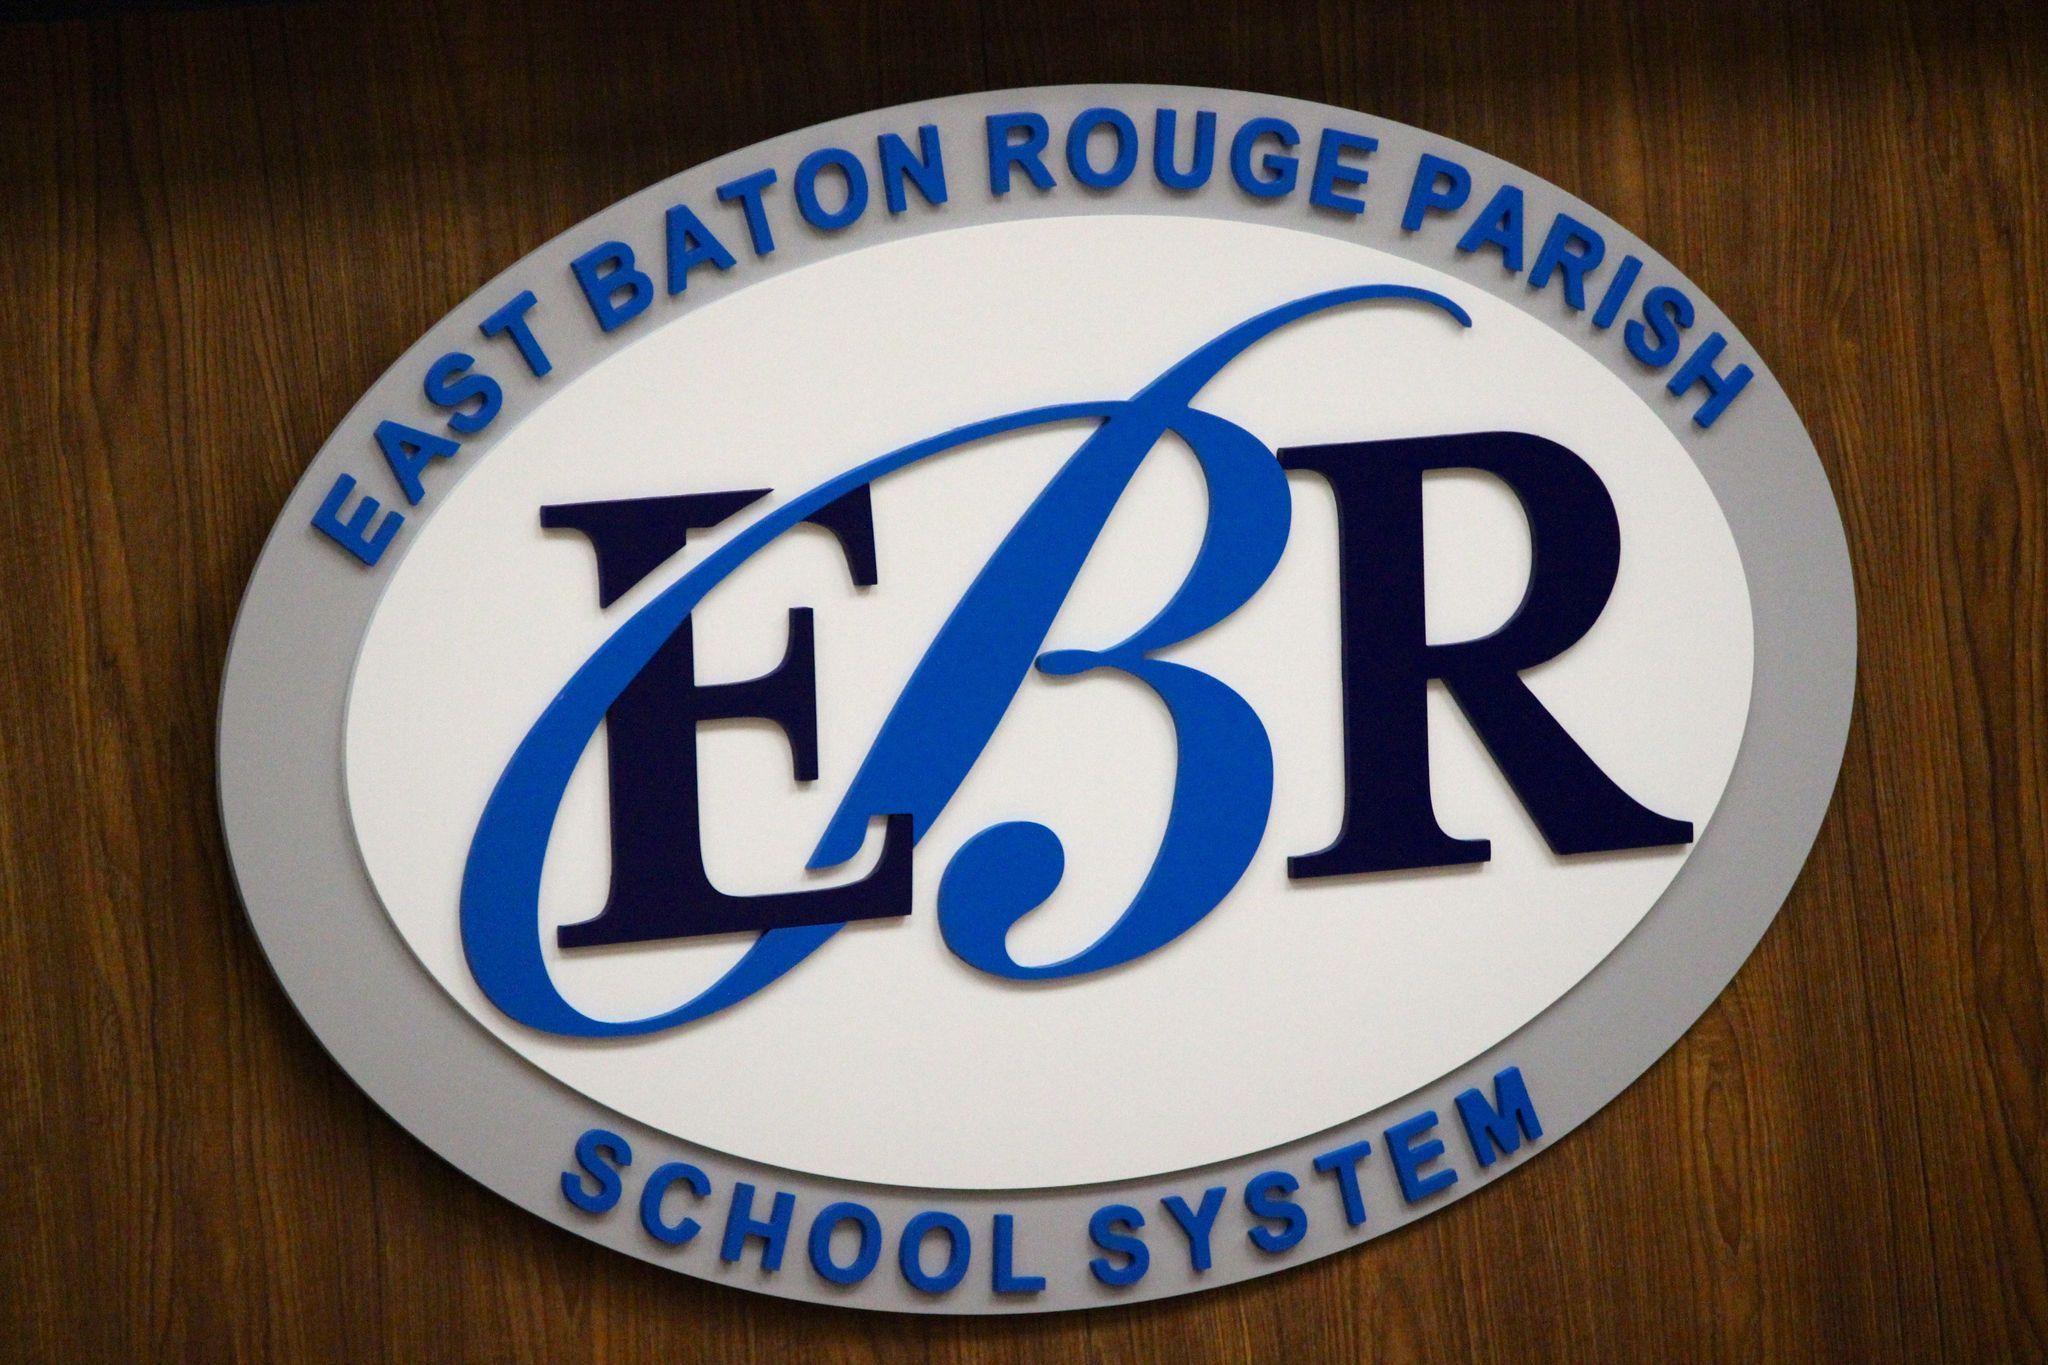 EBR Logo - EBR school survey gets enthusiastic response from parents, less so ...